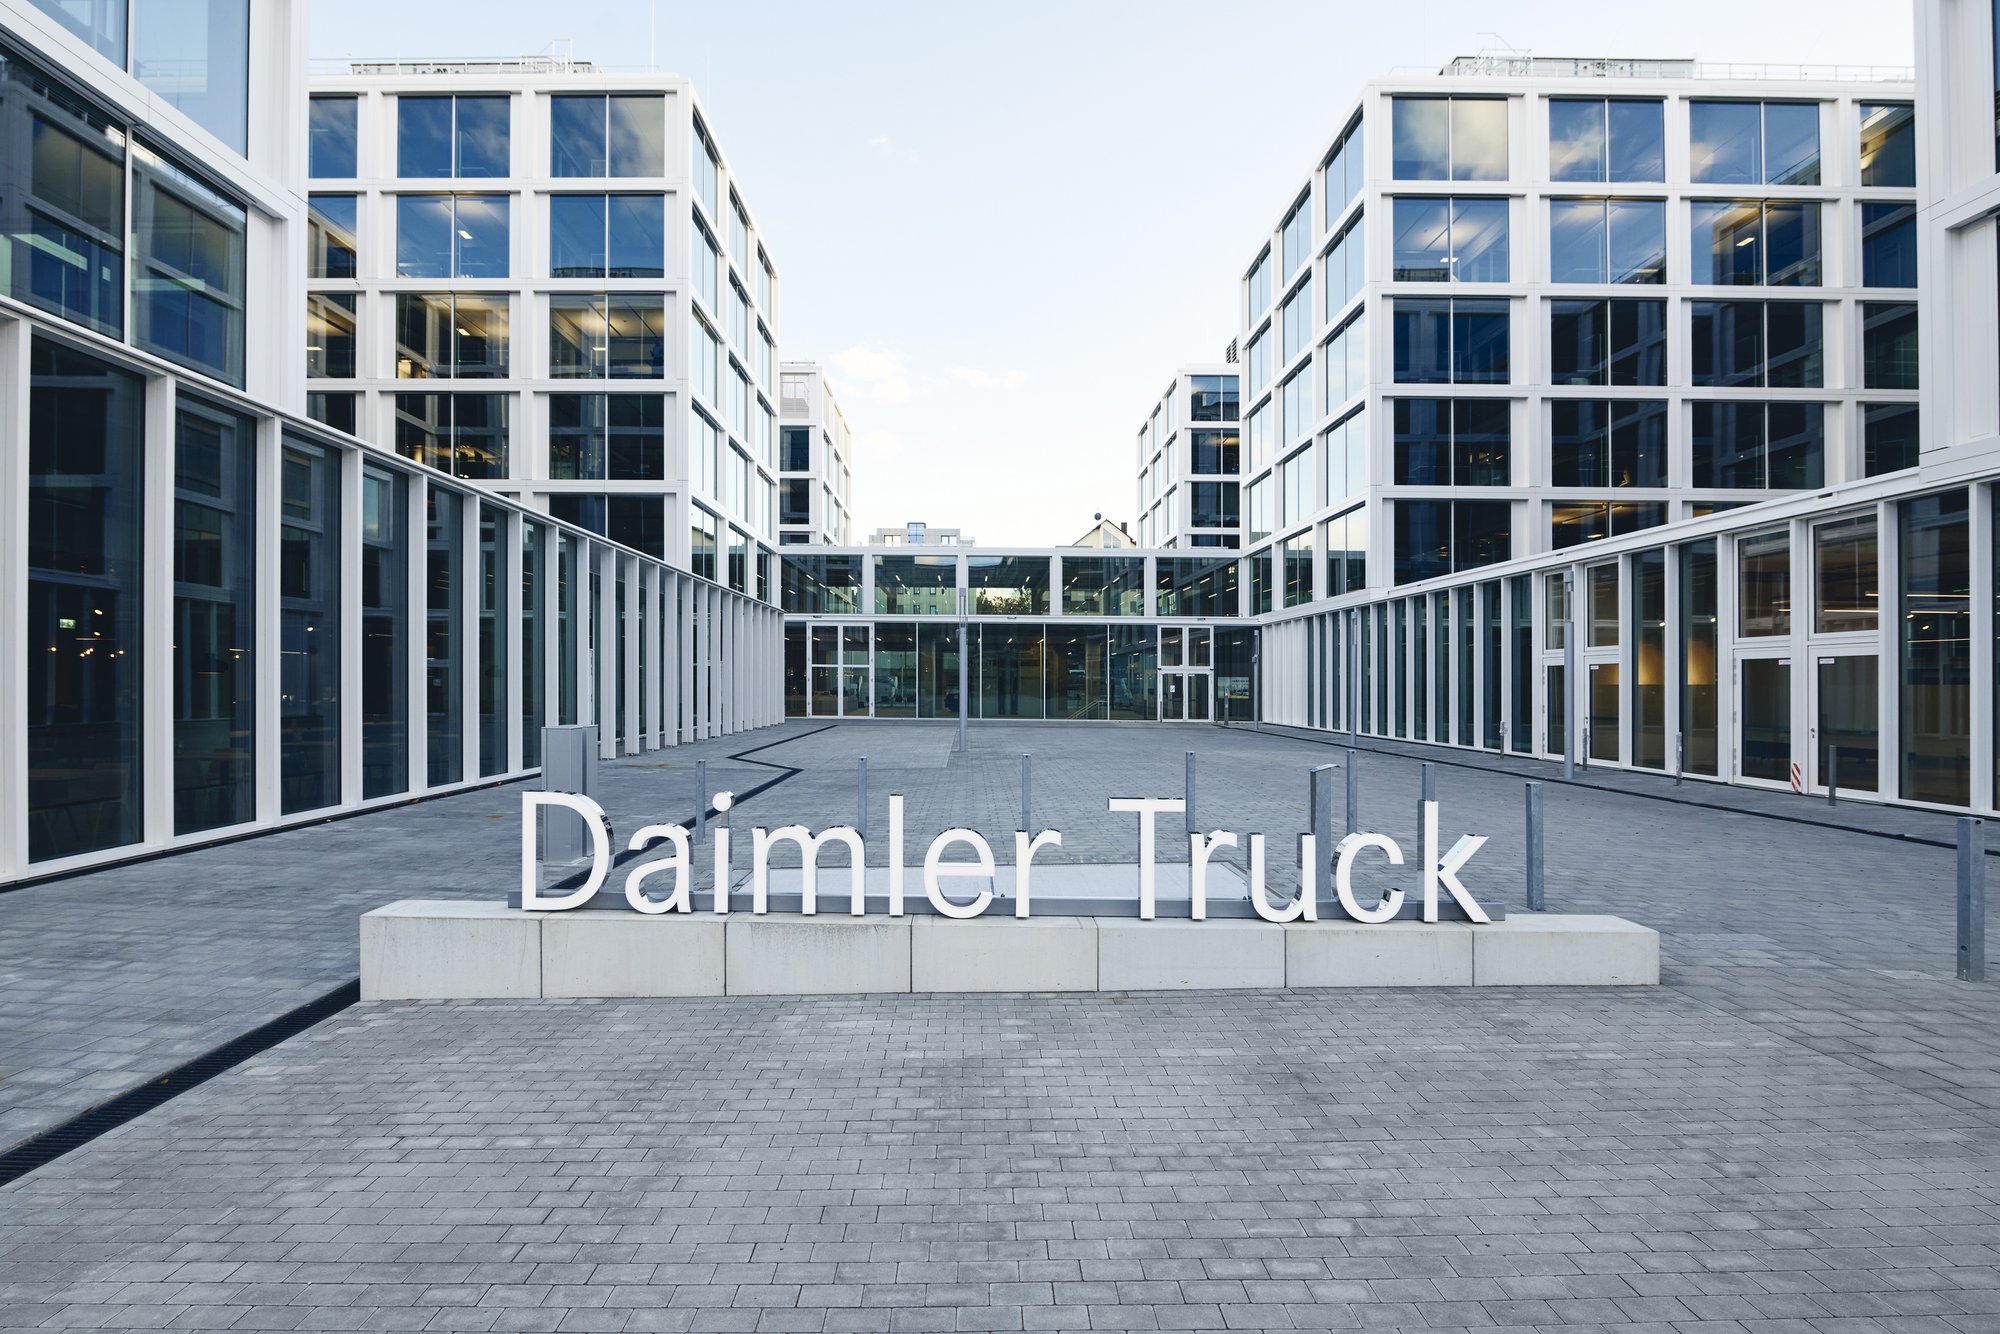 (c) Daimlertruck.com